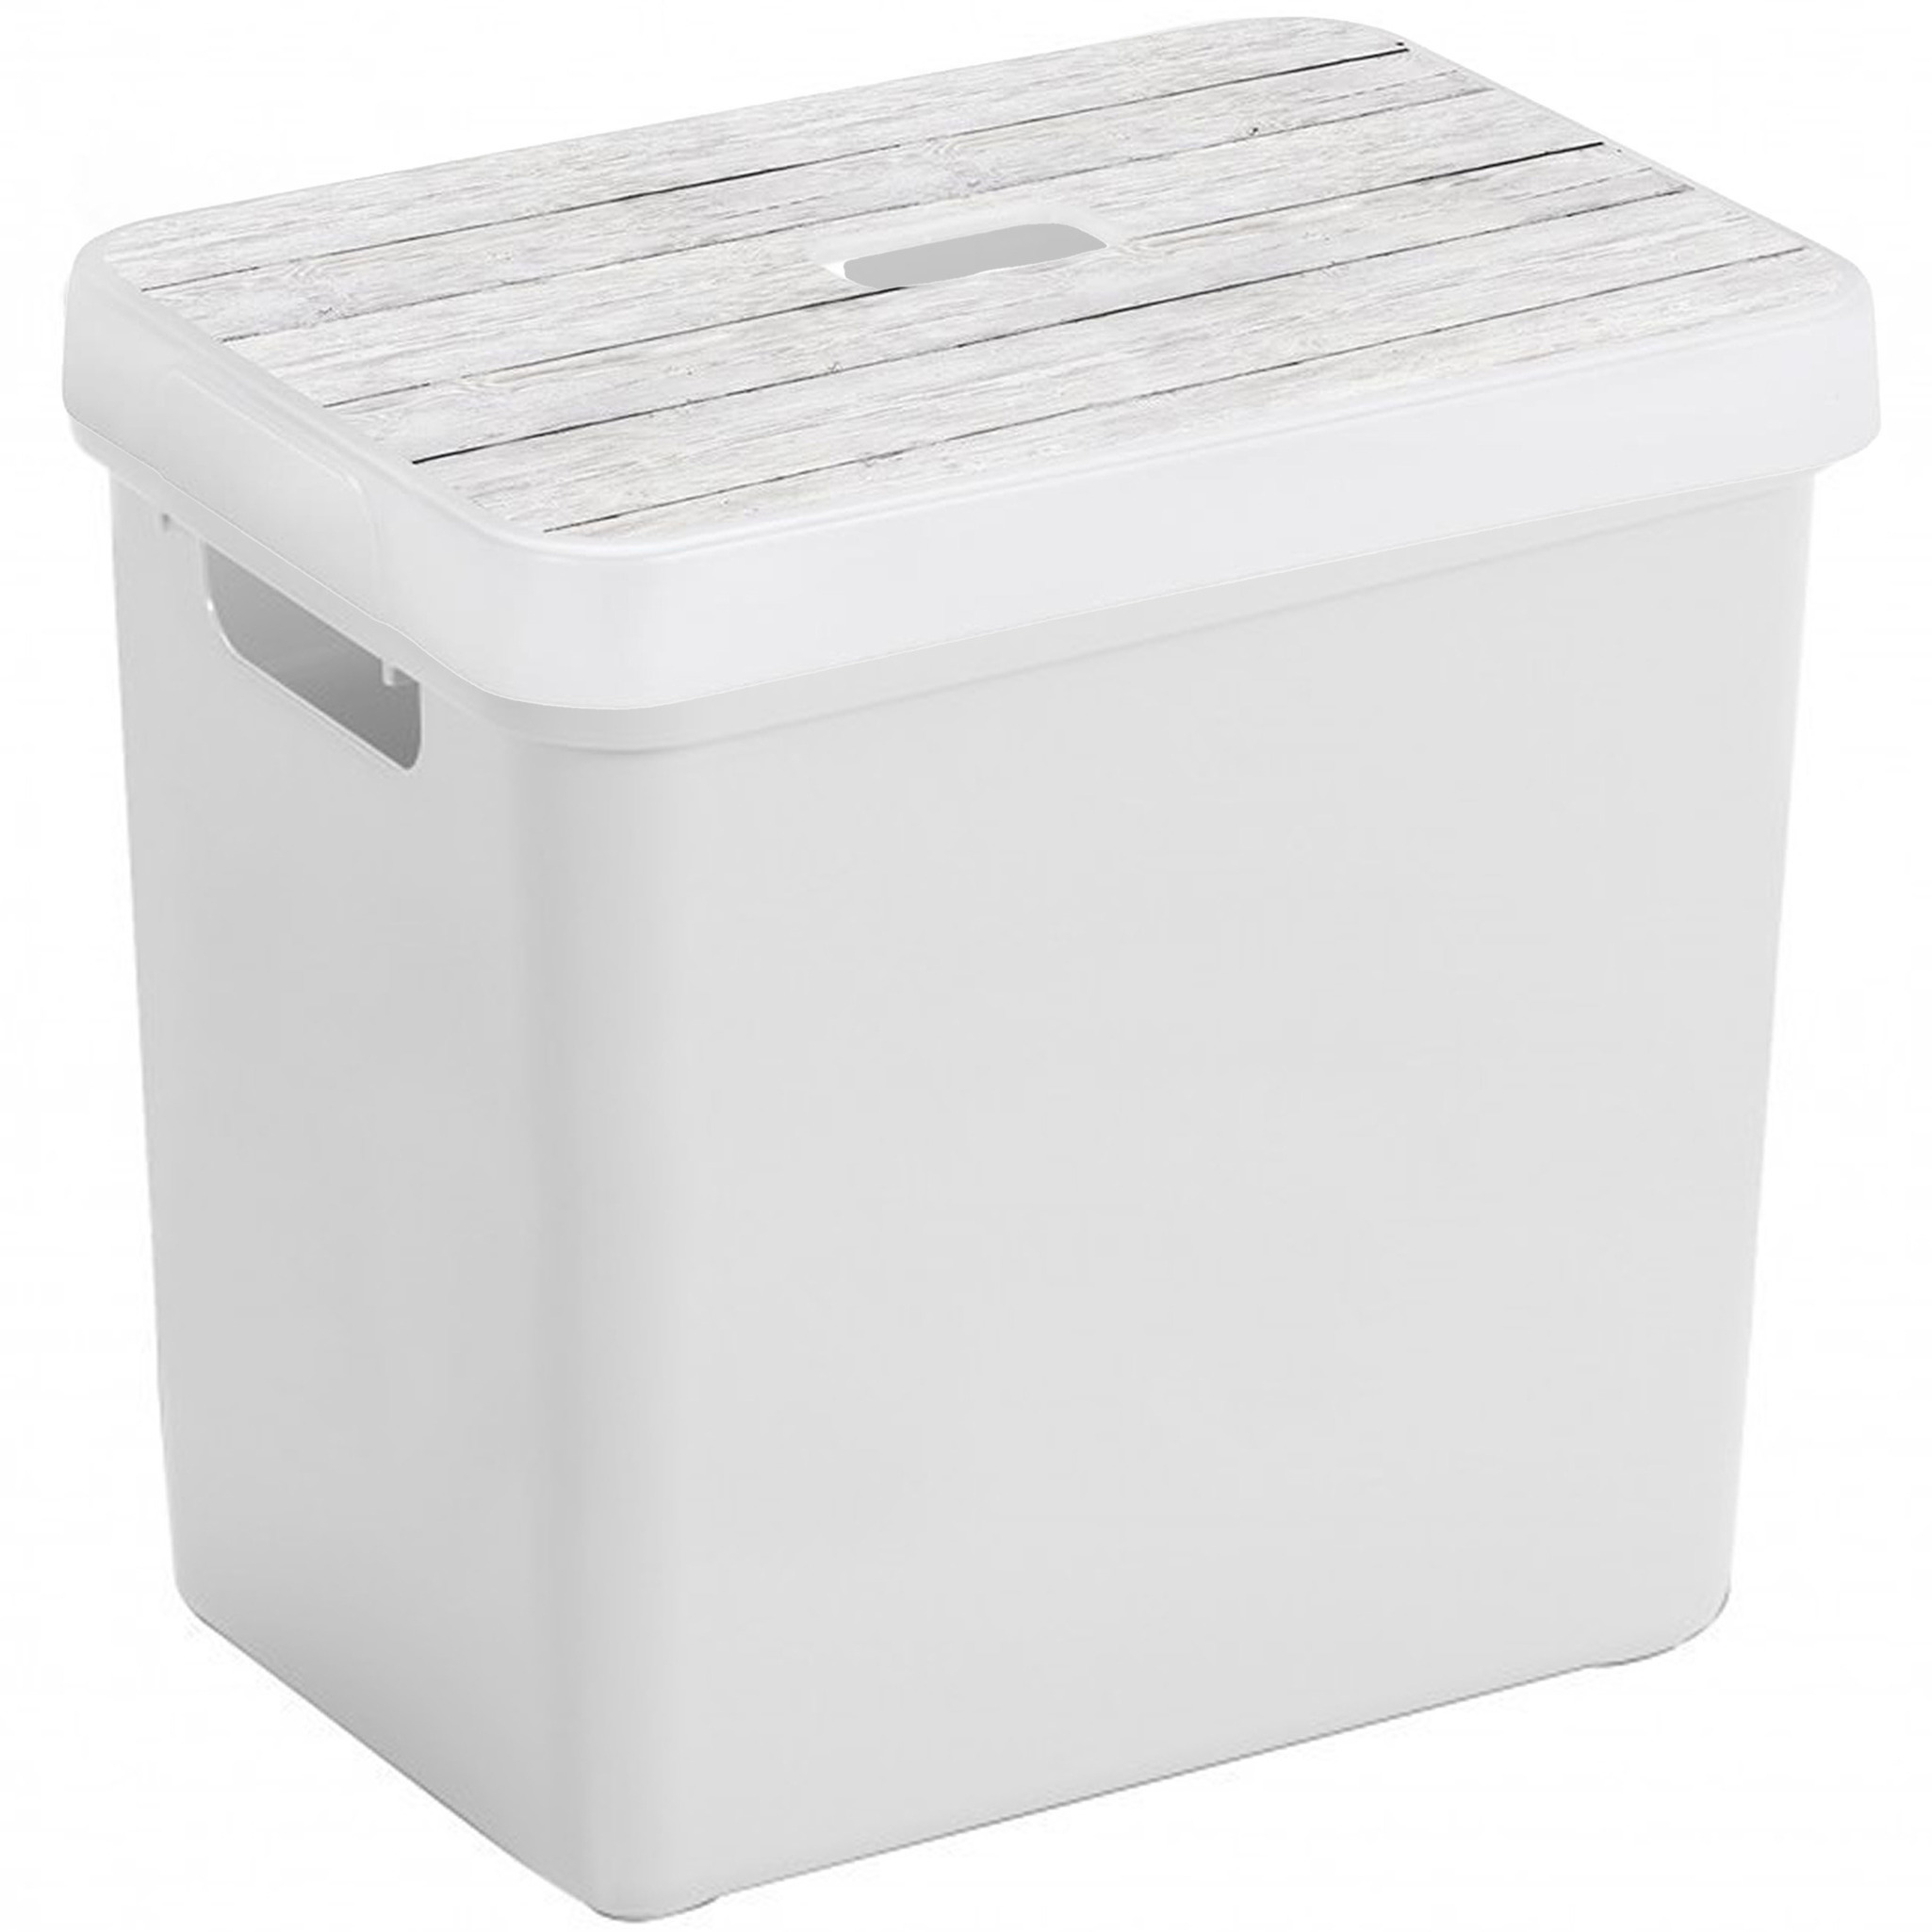 Opbergbox-mand wit 25 liter kunststof met deksel